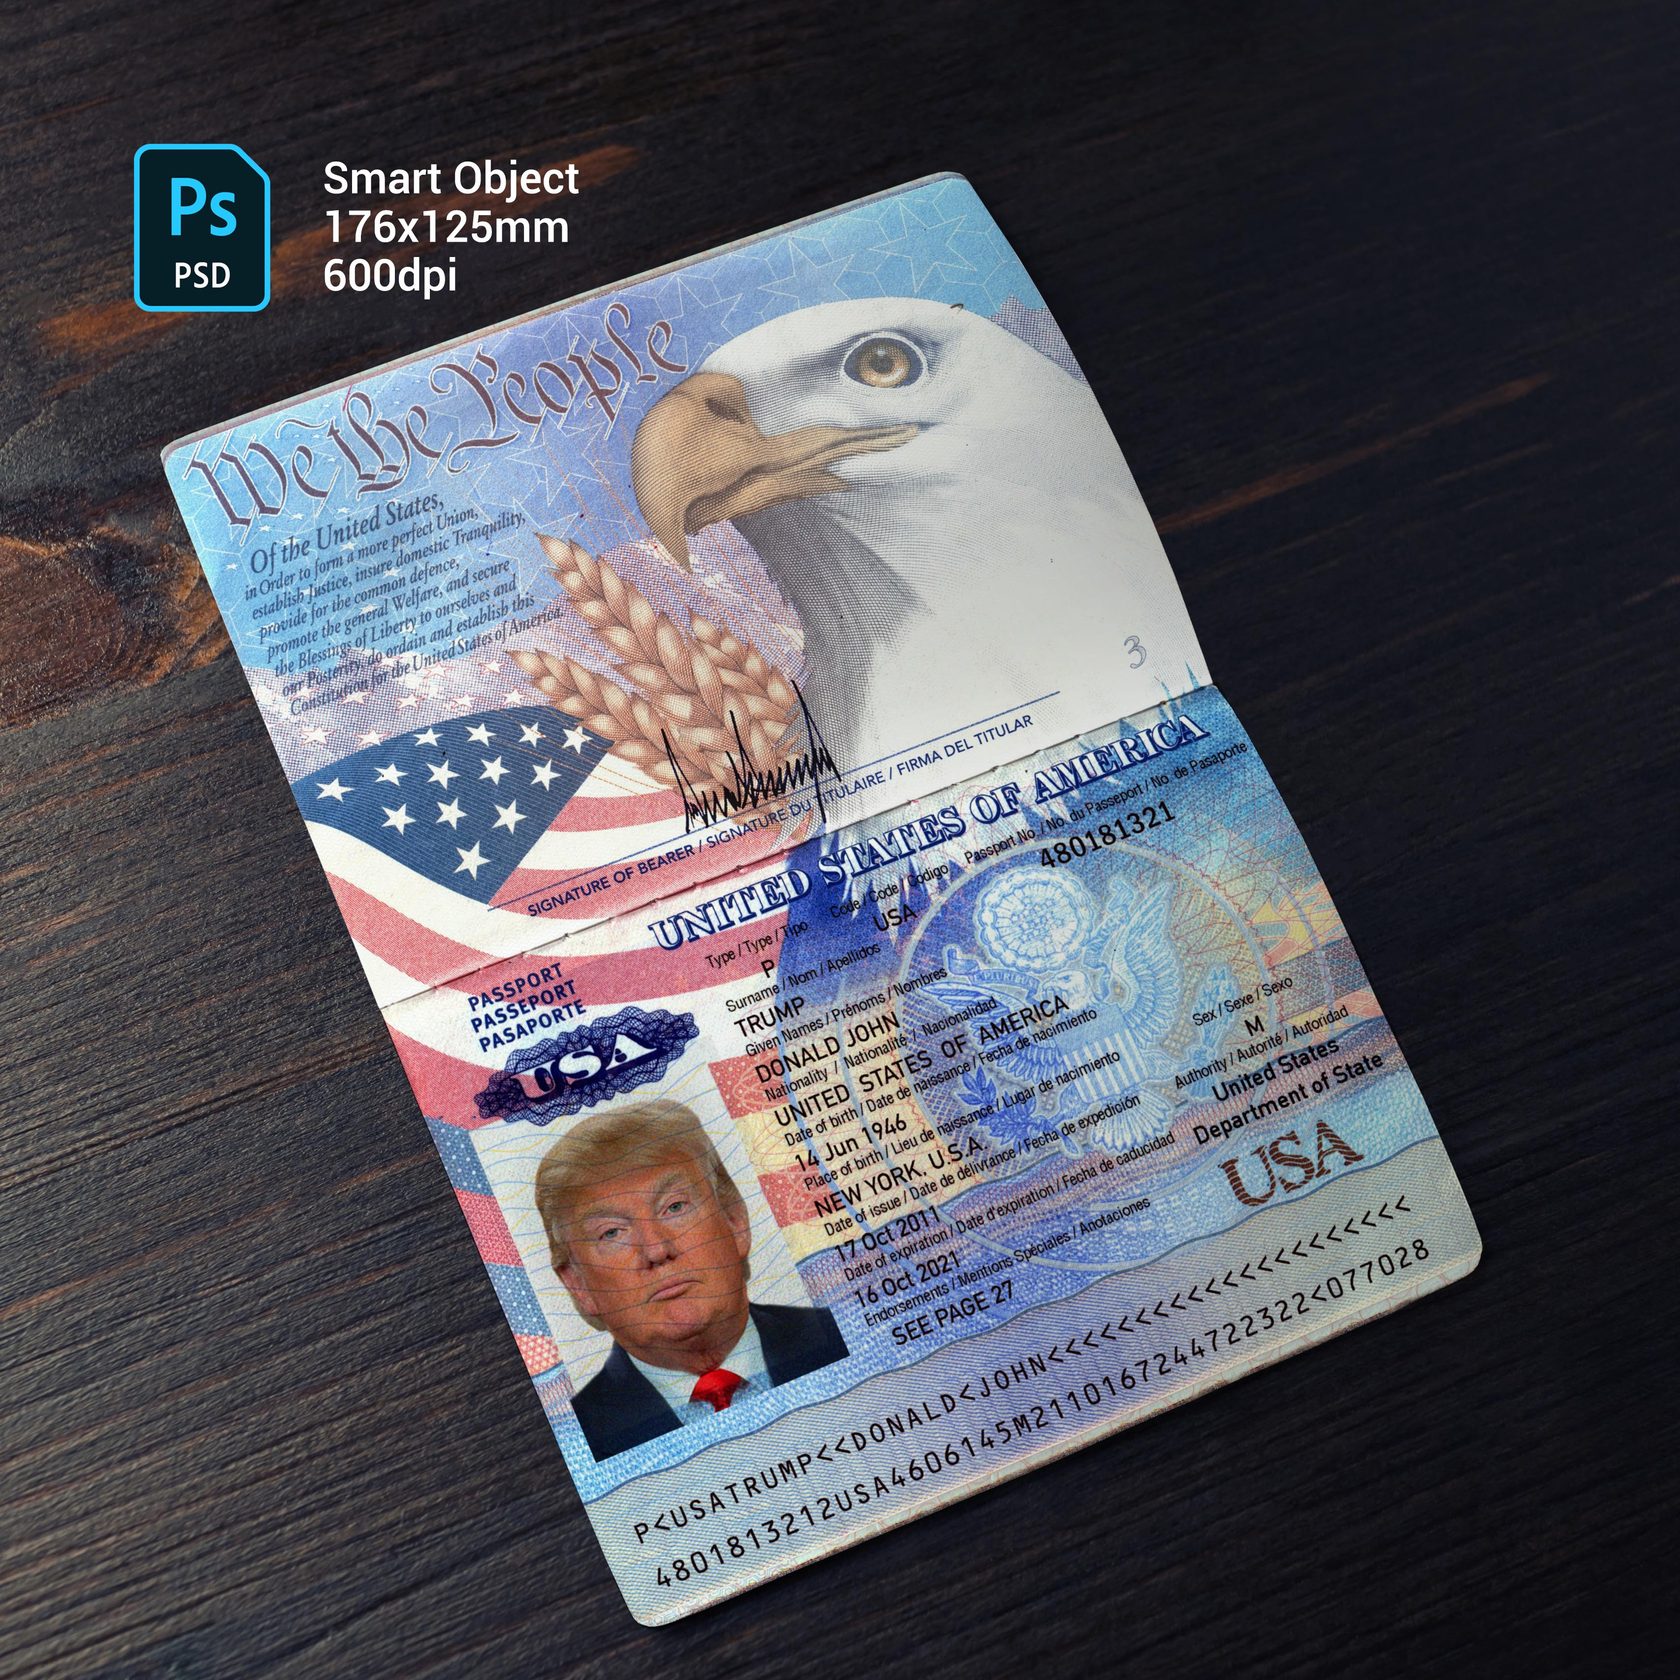 United States of America Passport 2006+ PSD1